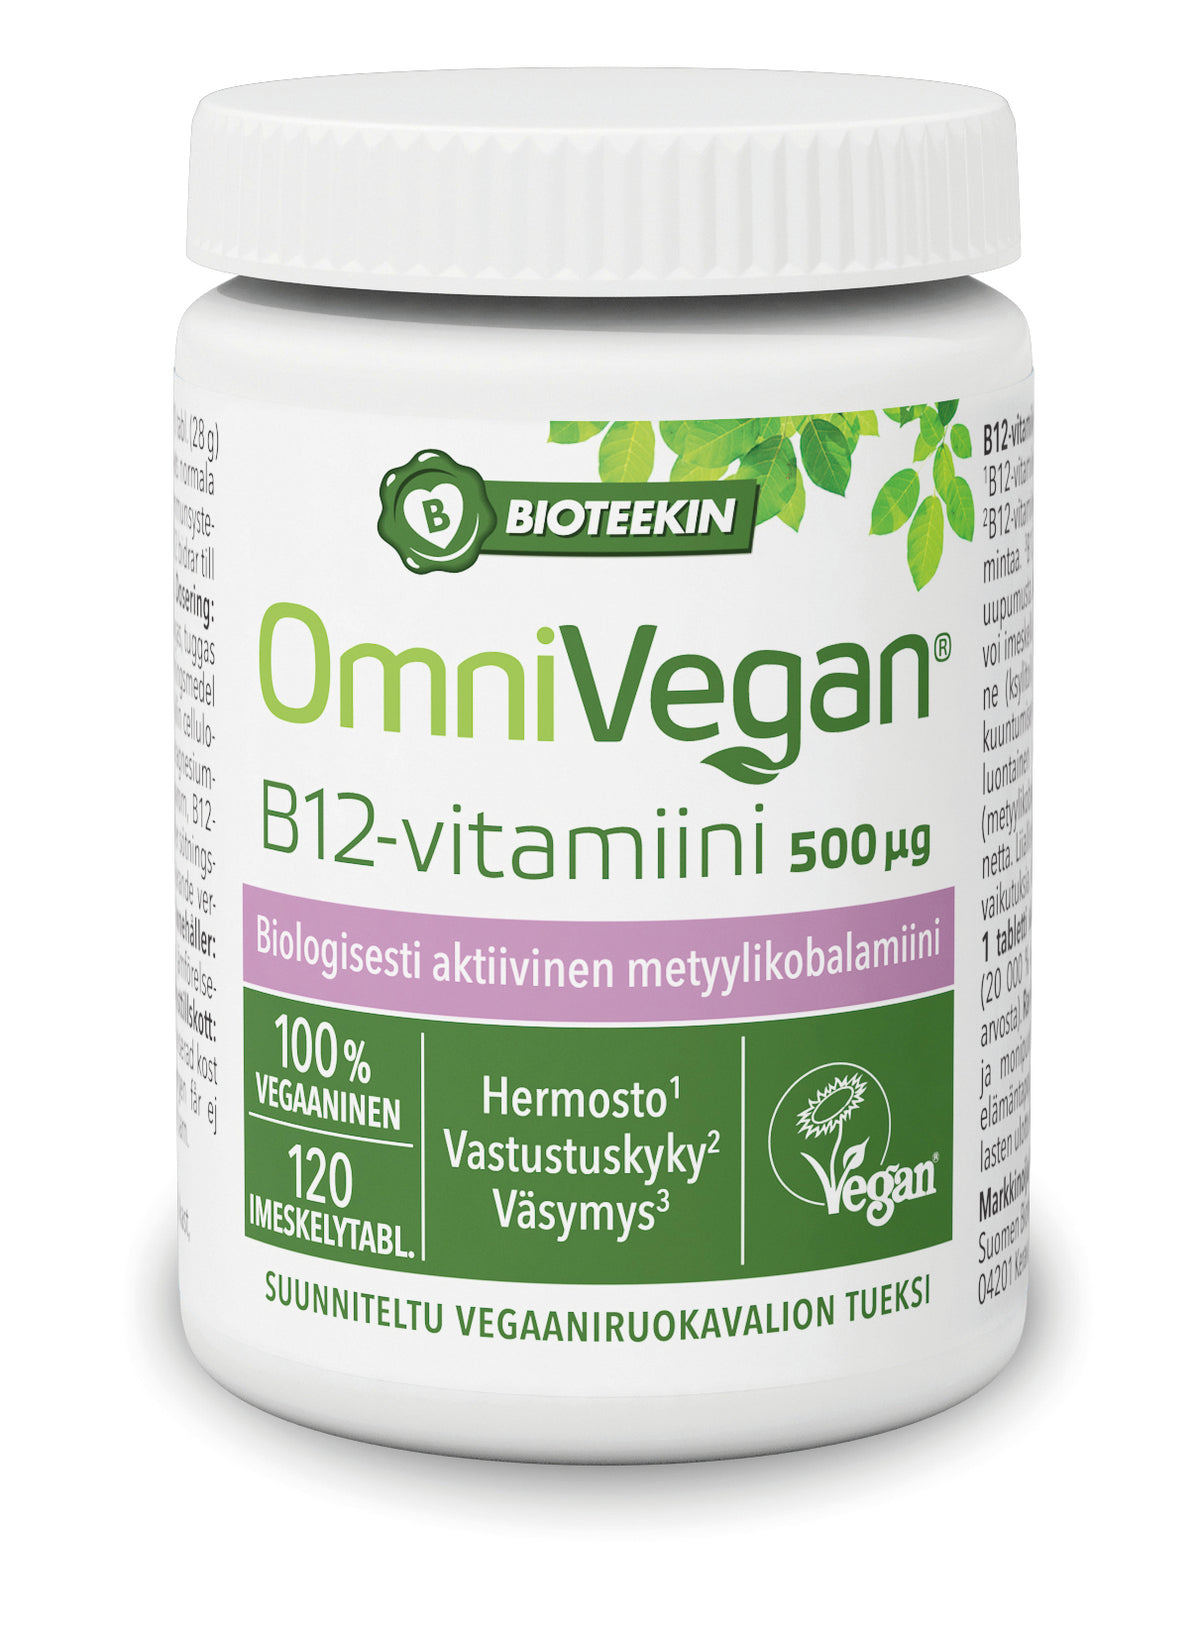 Bioteekin Omnivegan B12-vitamiini 500 μg 120 imeskelytablettia - erä